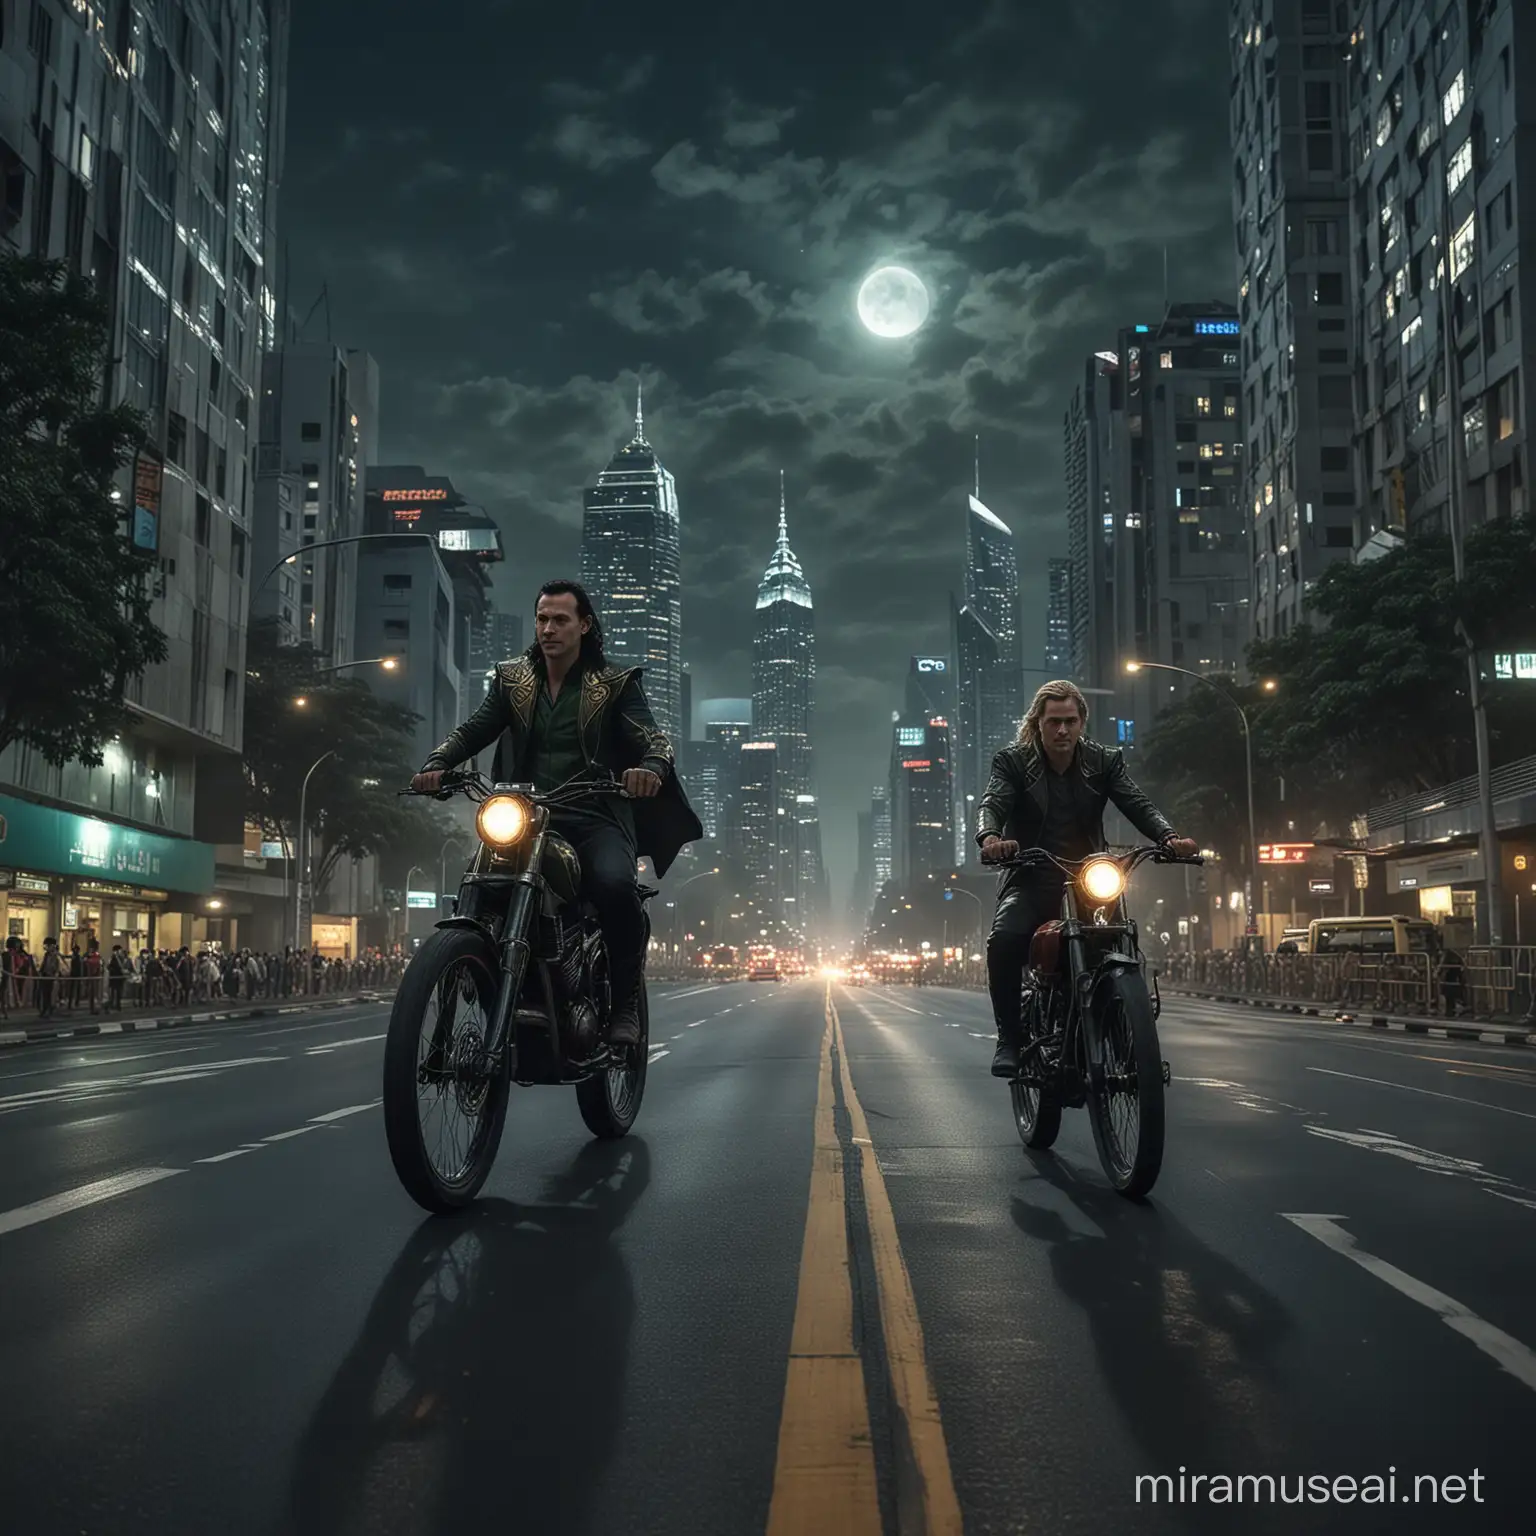 Loki and Thor Riding Motorcycle Through Jakarta Night Skyline